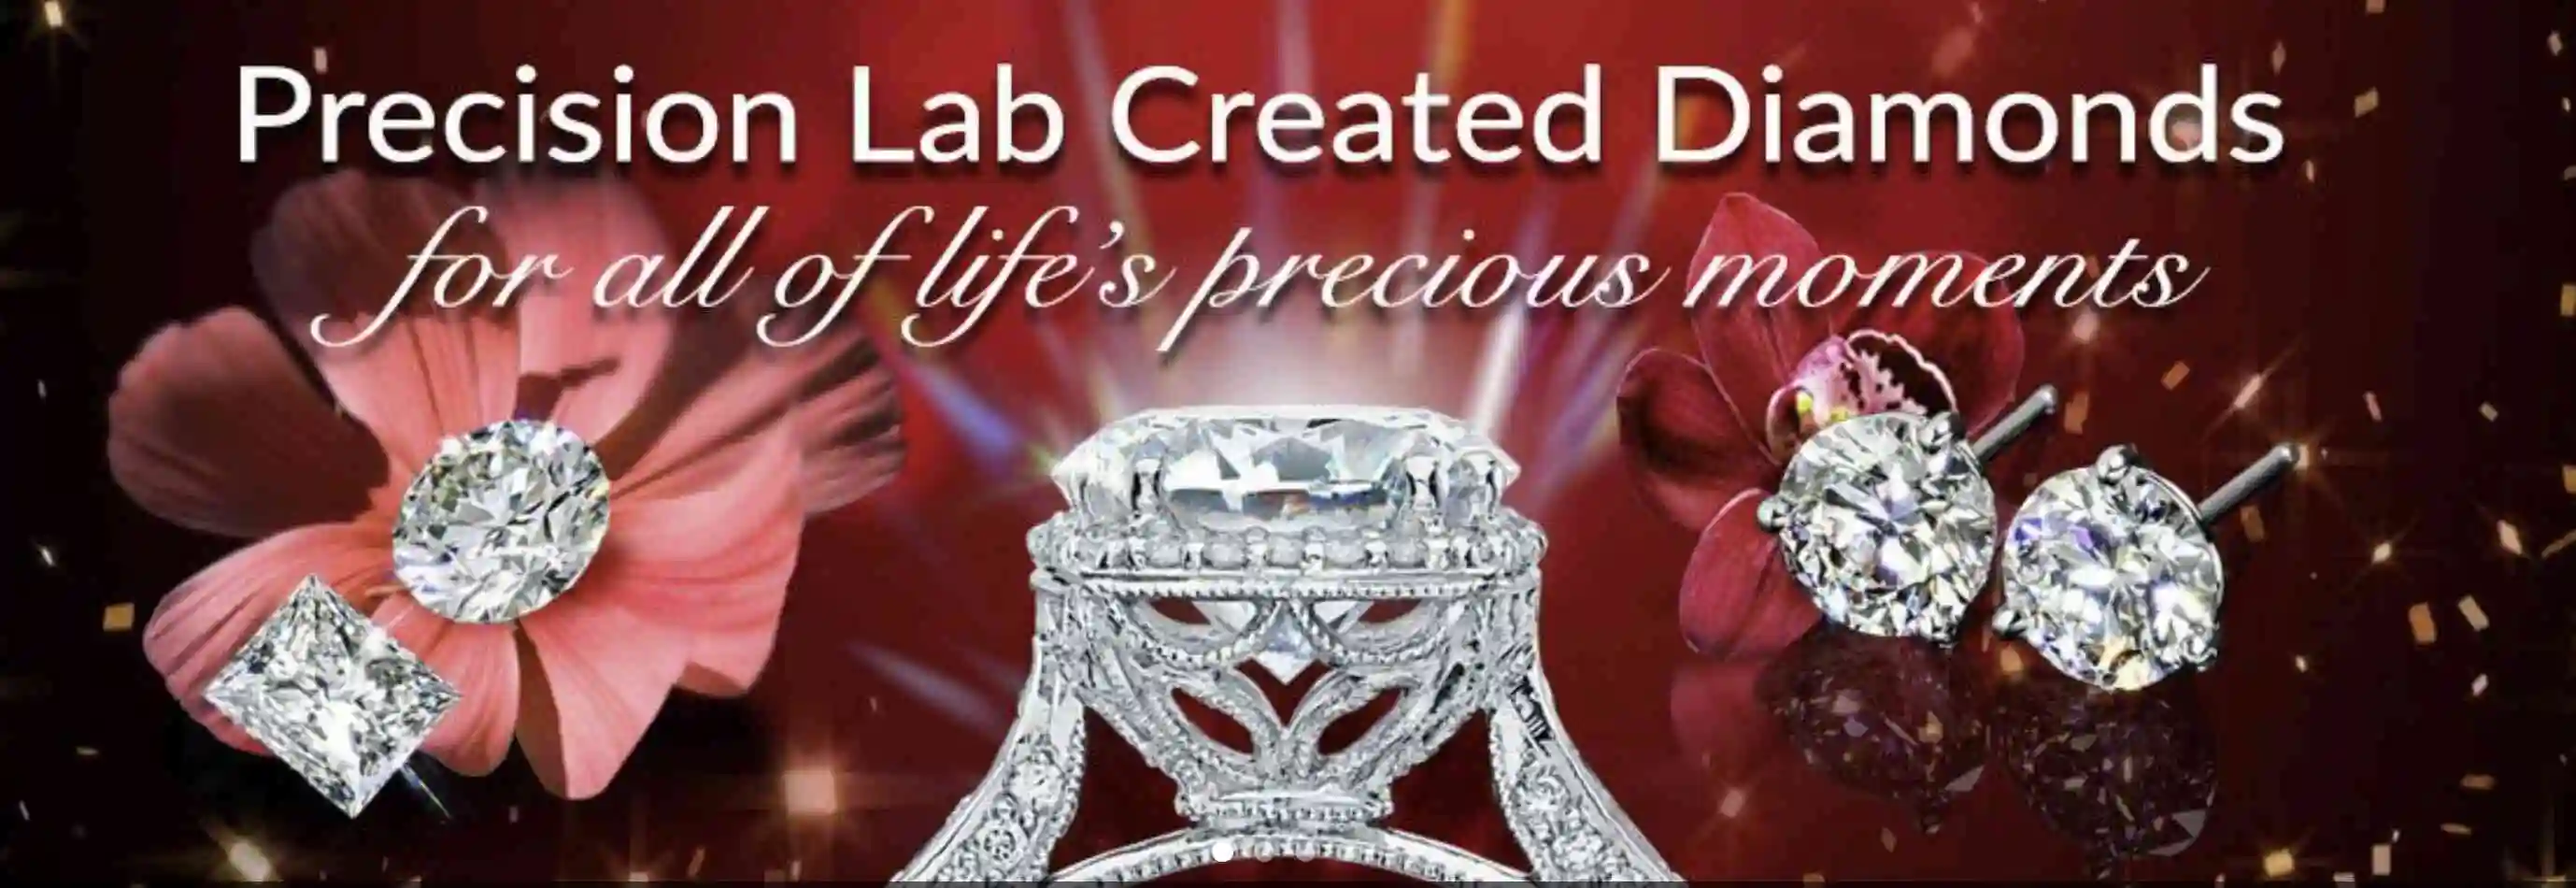 Lab-created diamonds at Whiteflash